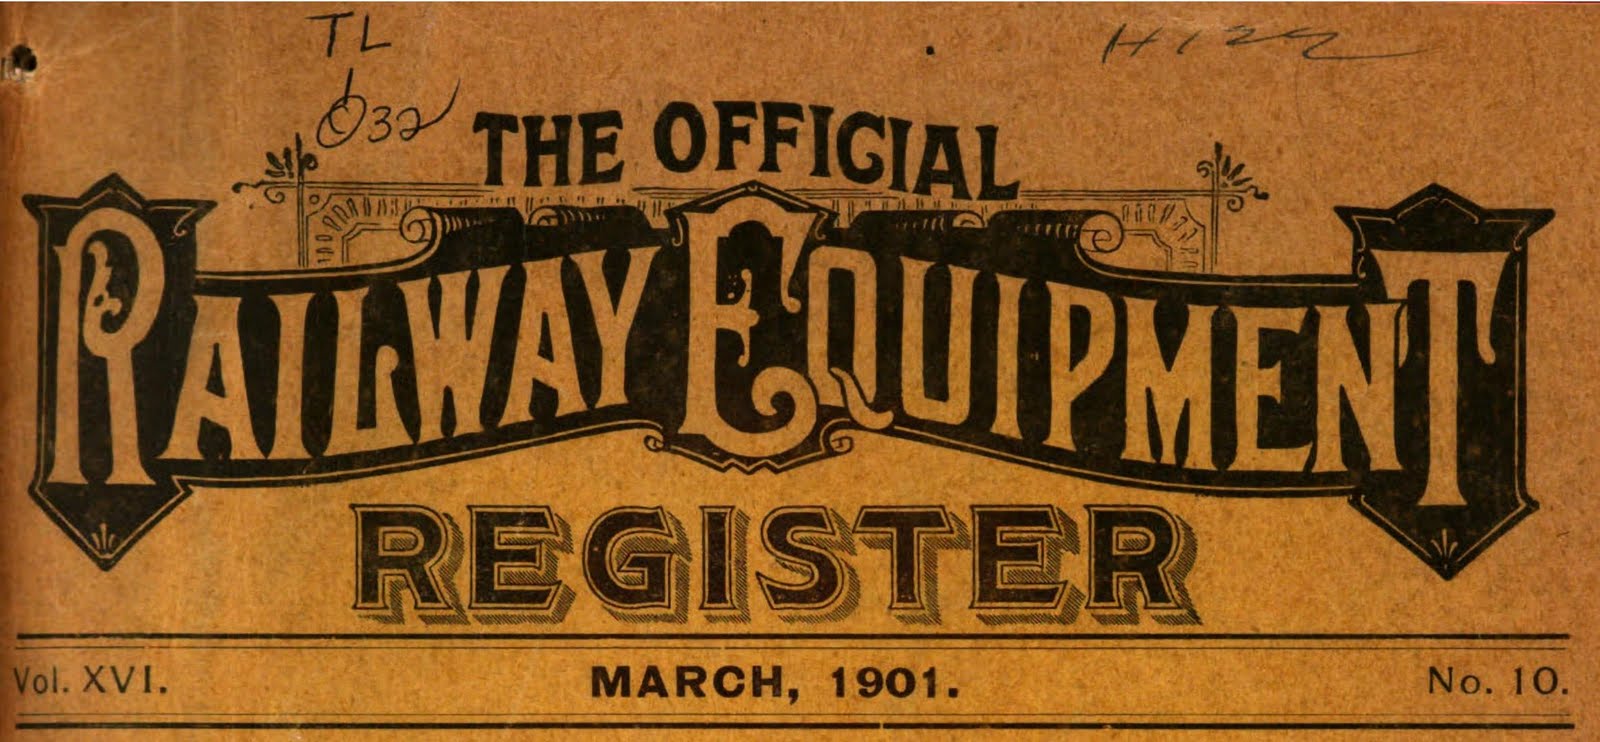 1898 Revenues: The Official Railway Equipment Register